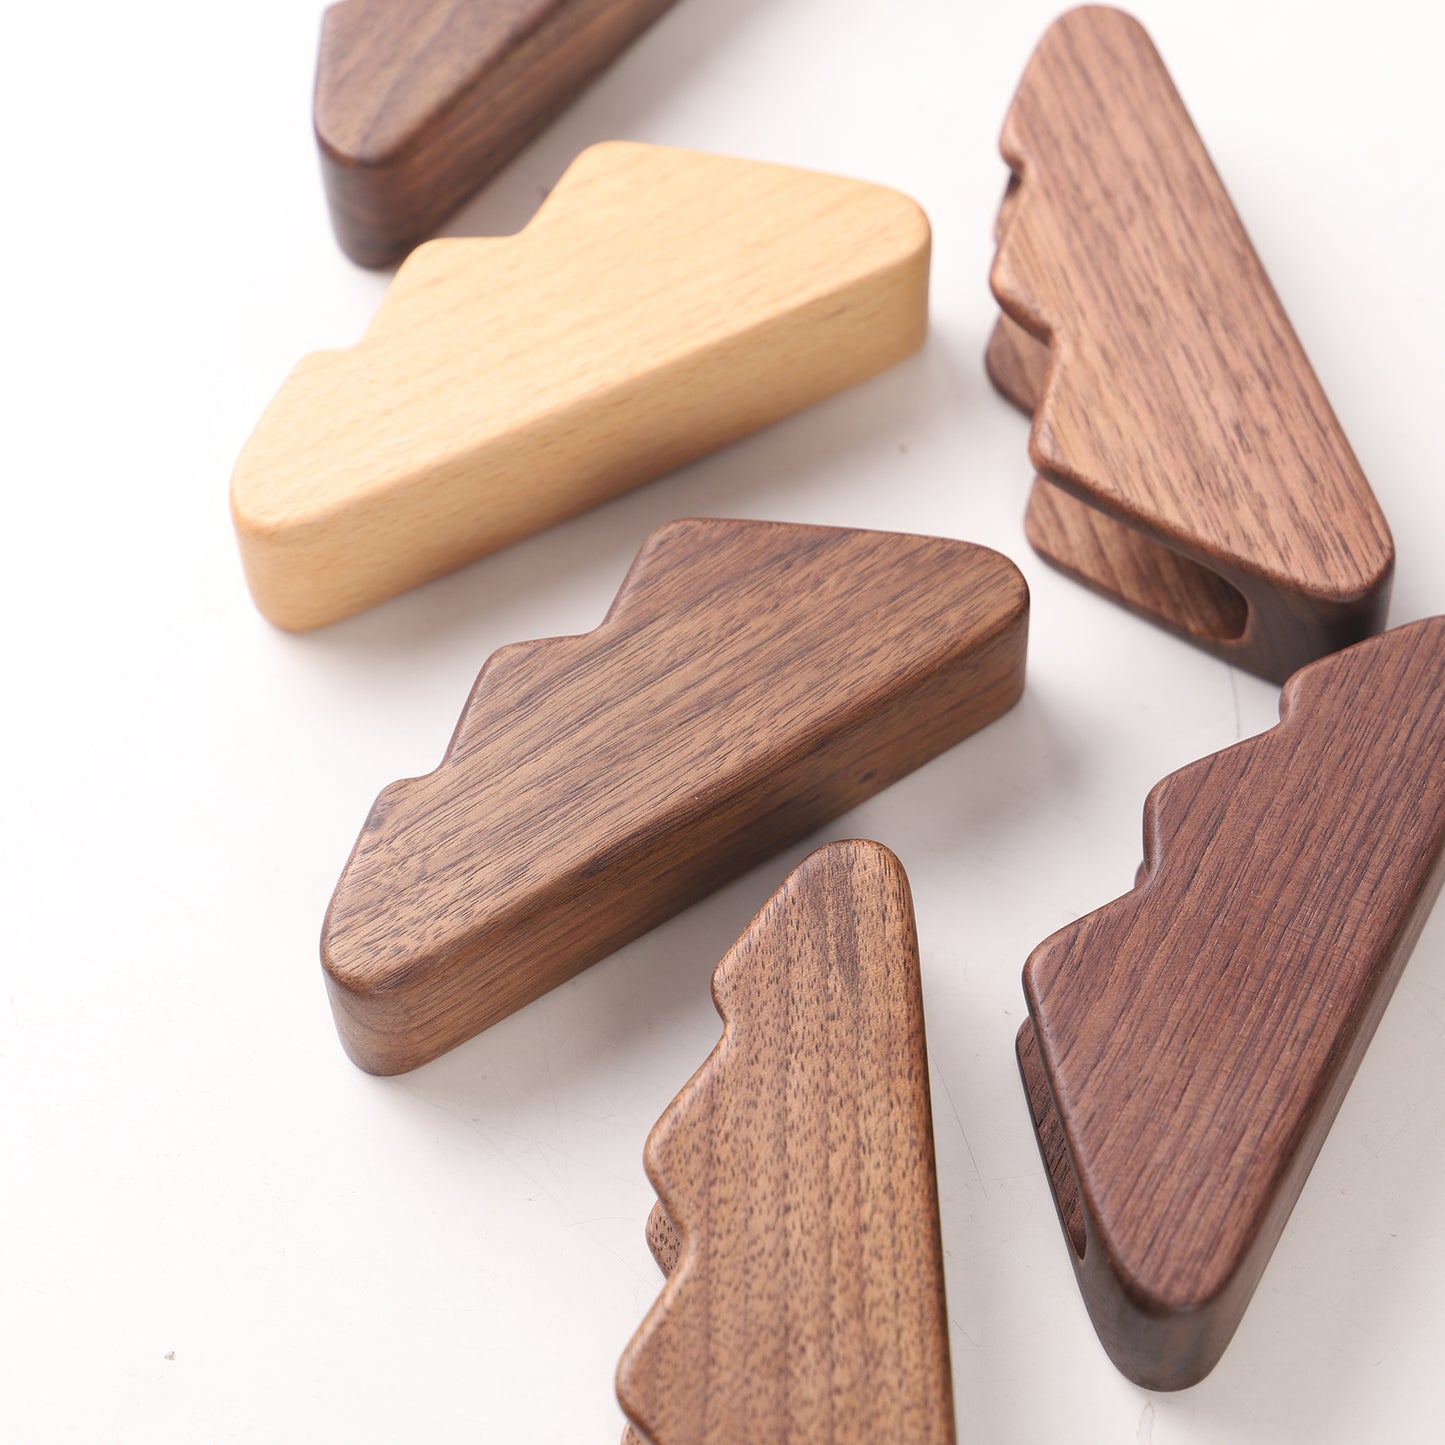 muso wood | Business Card Holder for Desk